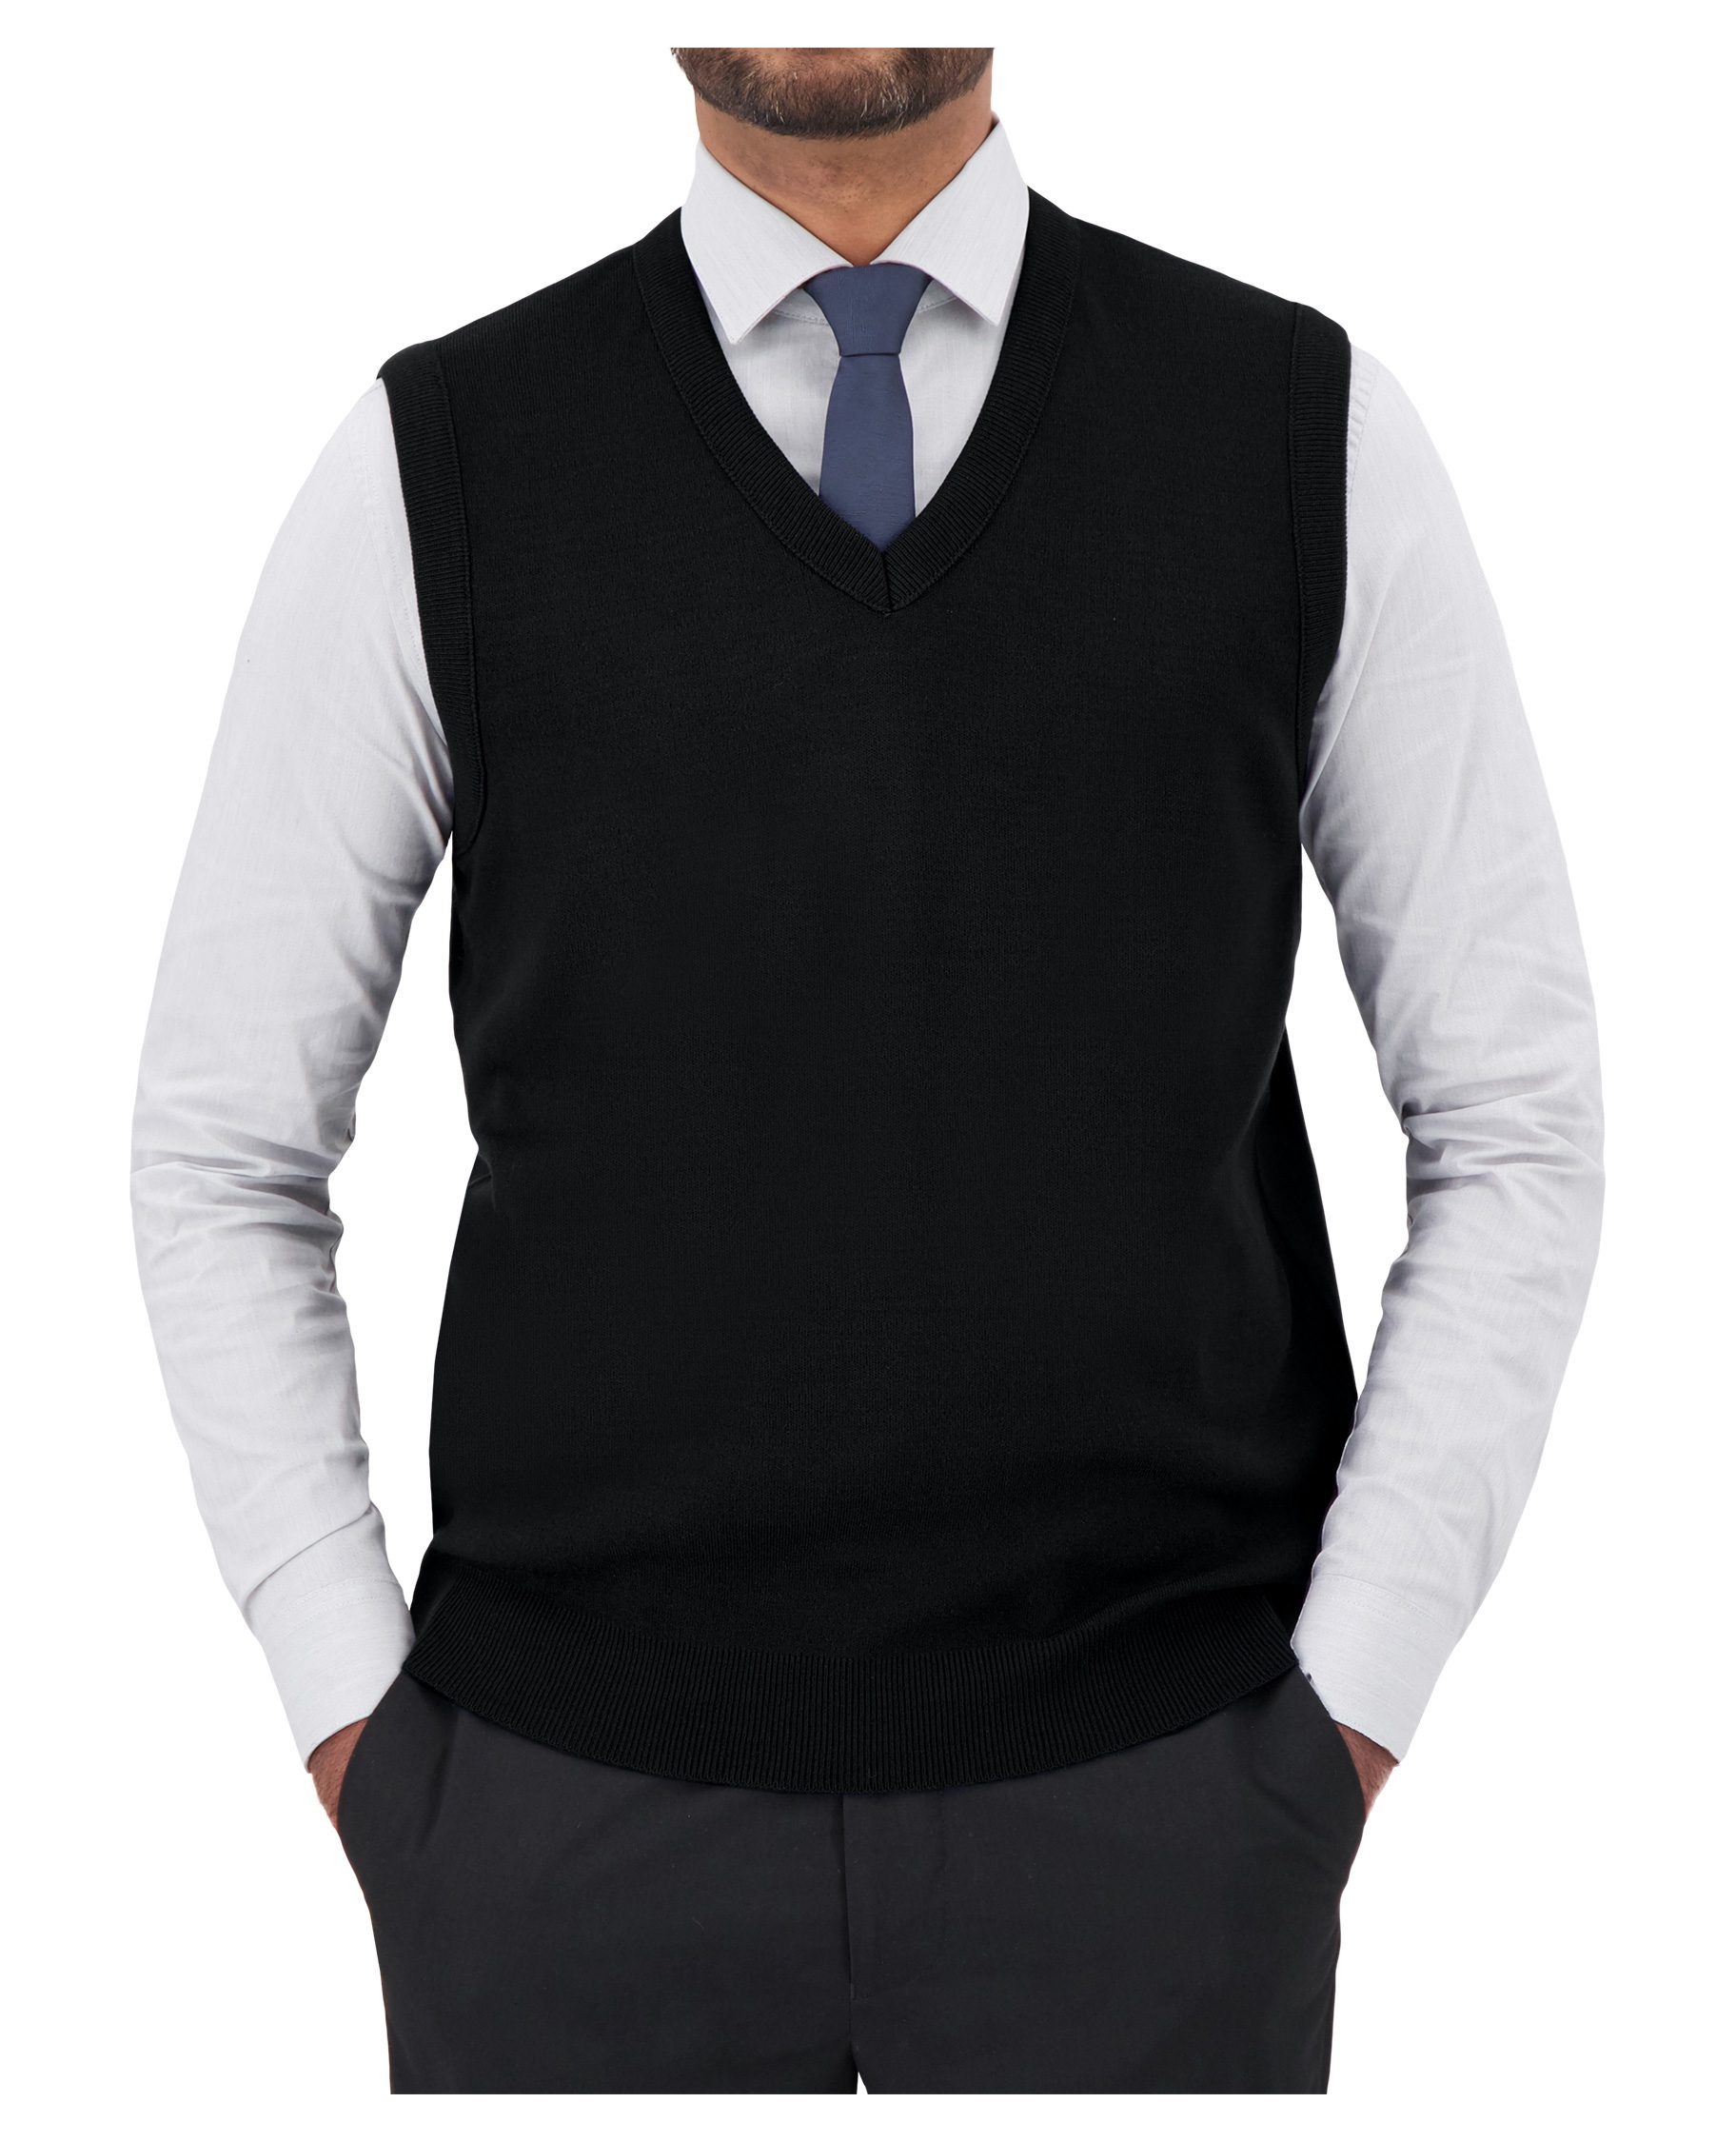 Cobmex "Cashmere"-Like V-Neck Vest #3009 Black